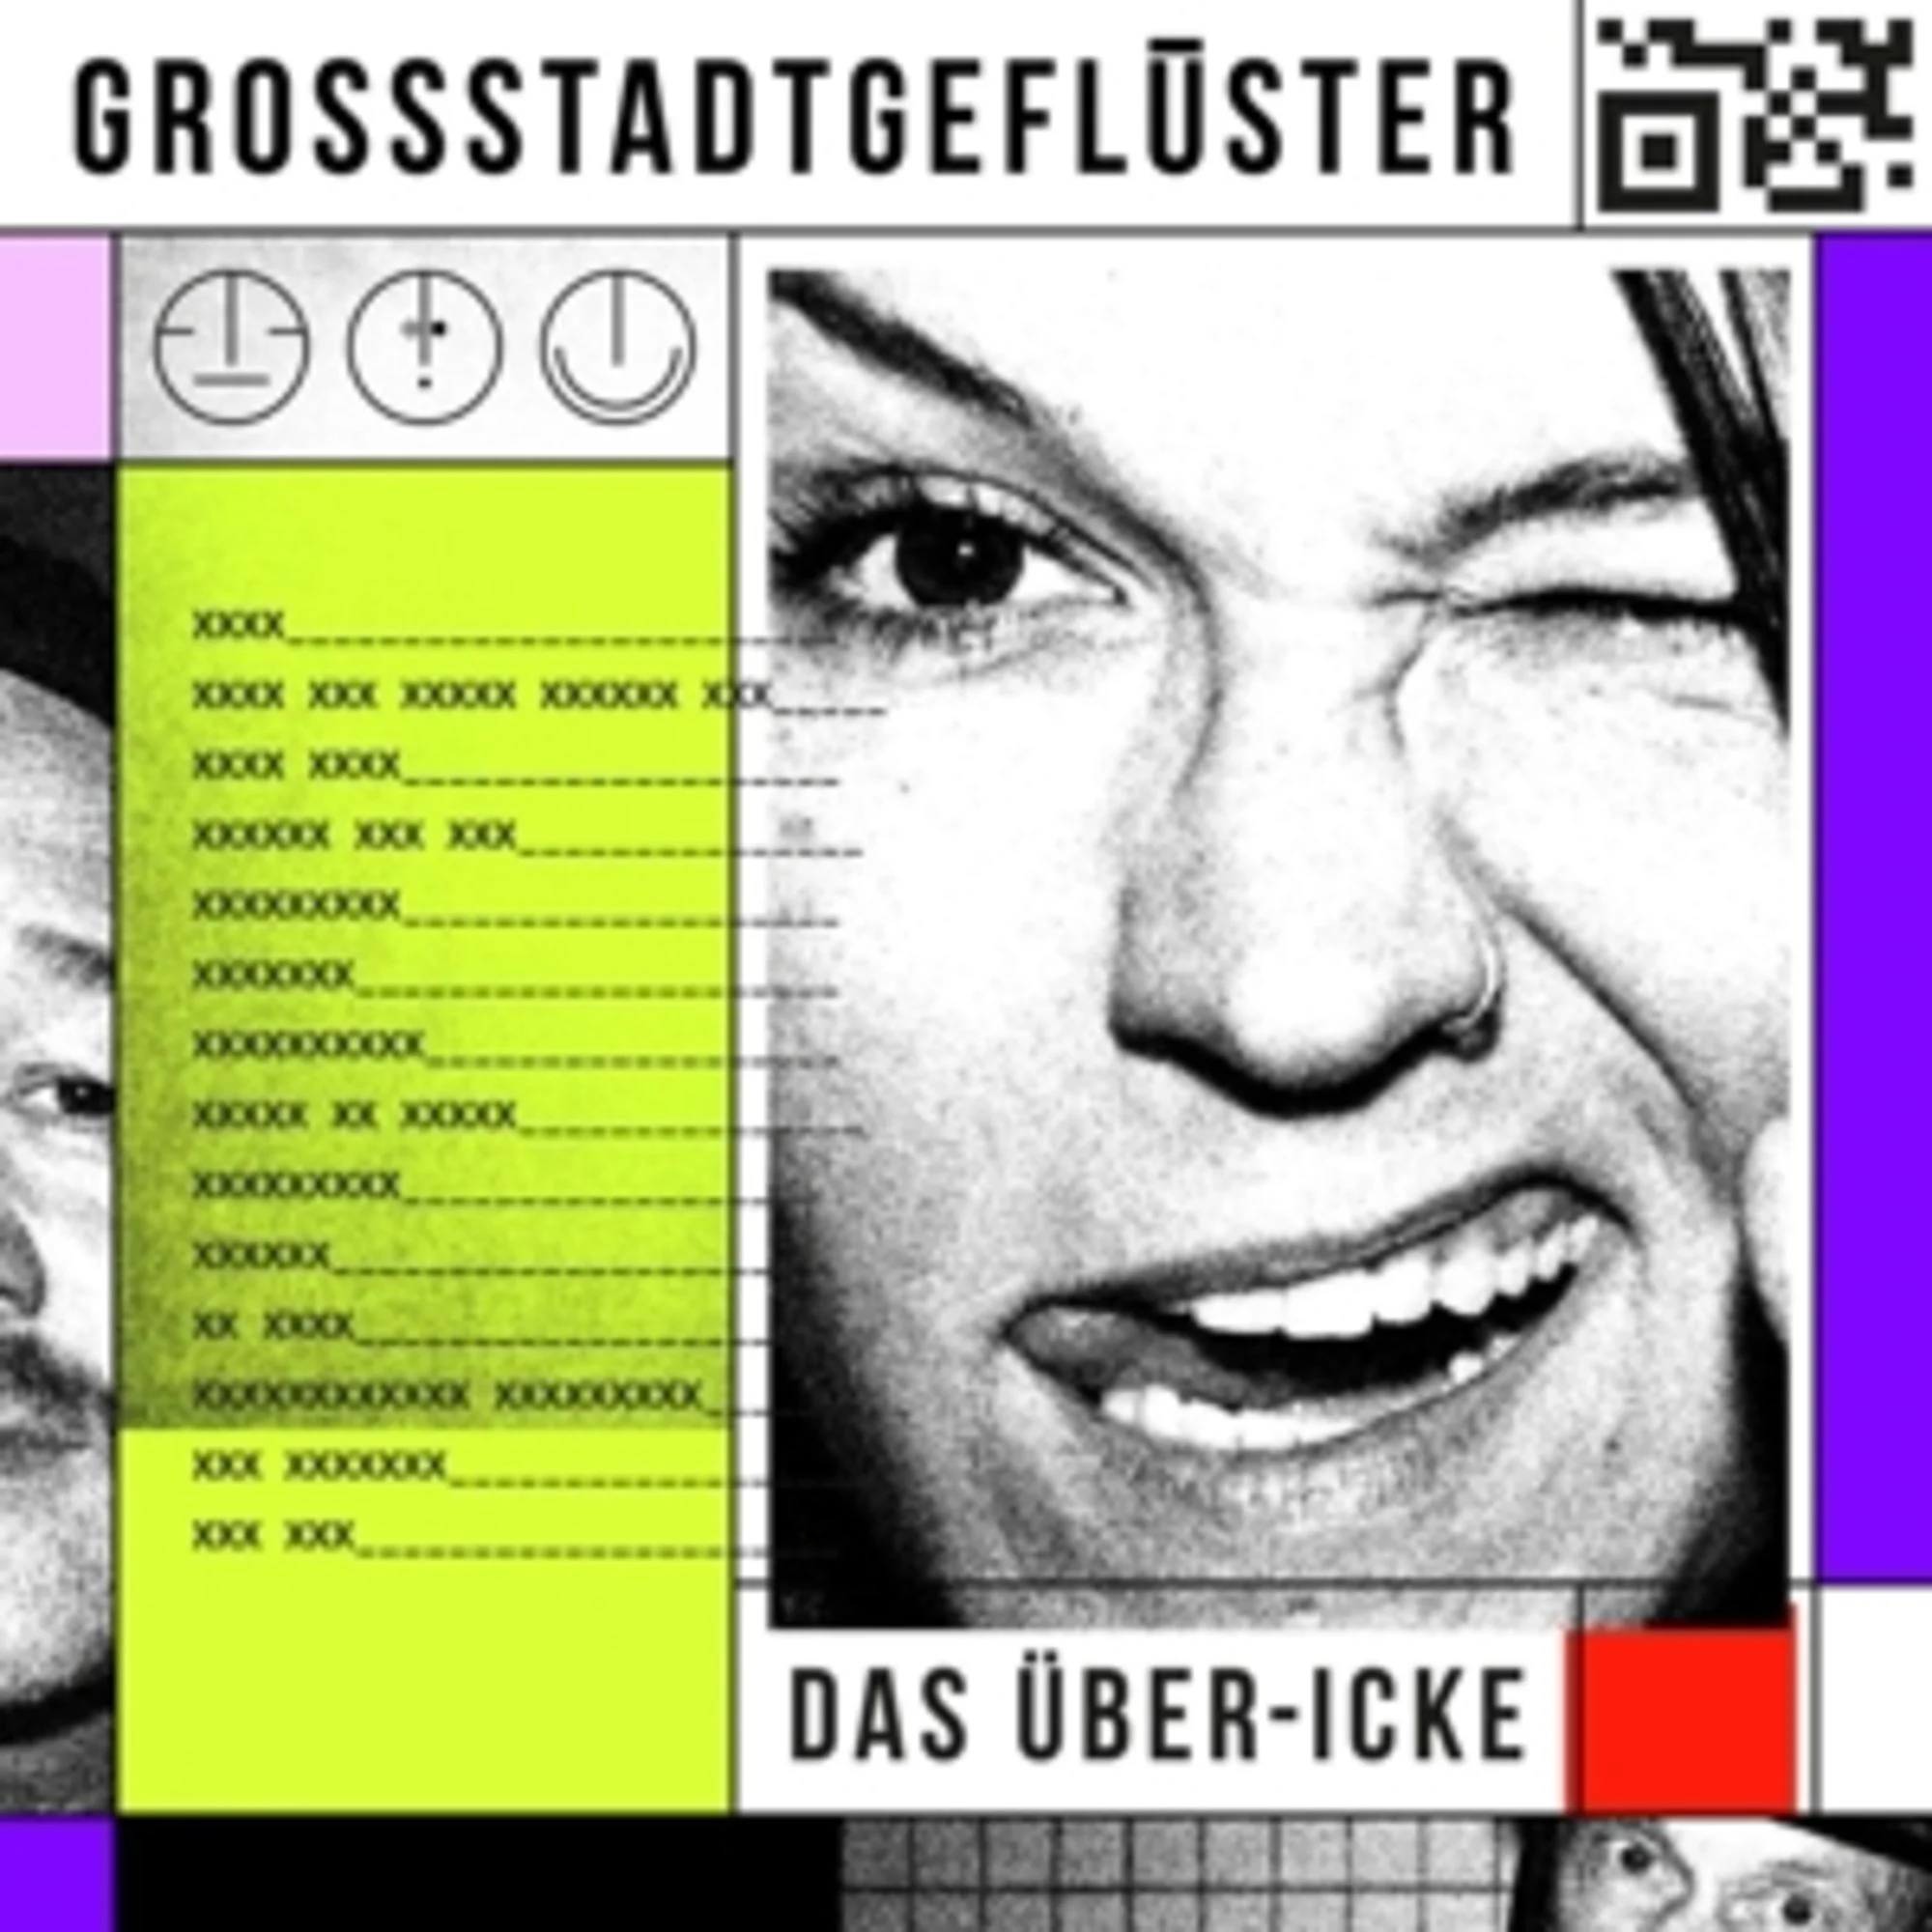 Grossstadtgeflüster — DAS ÜBER-ICKE cover artwork